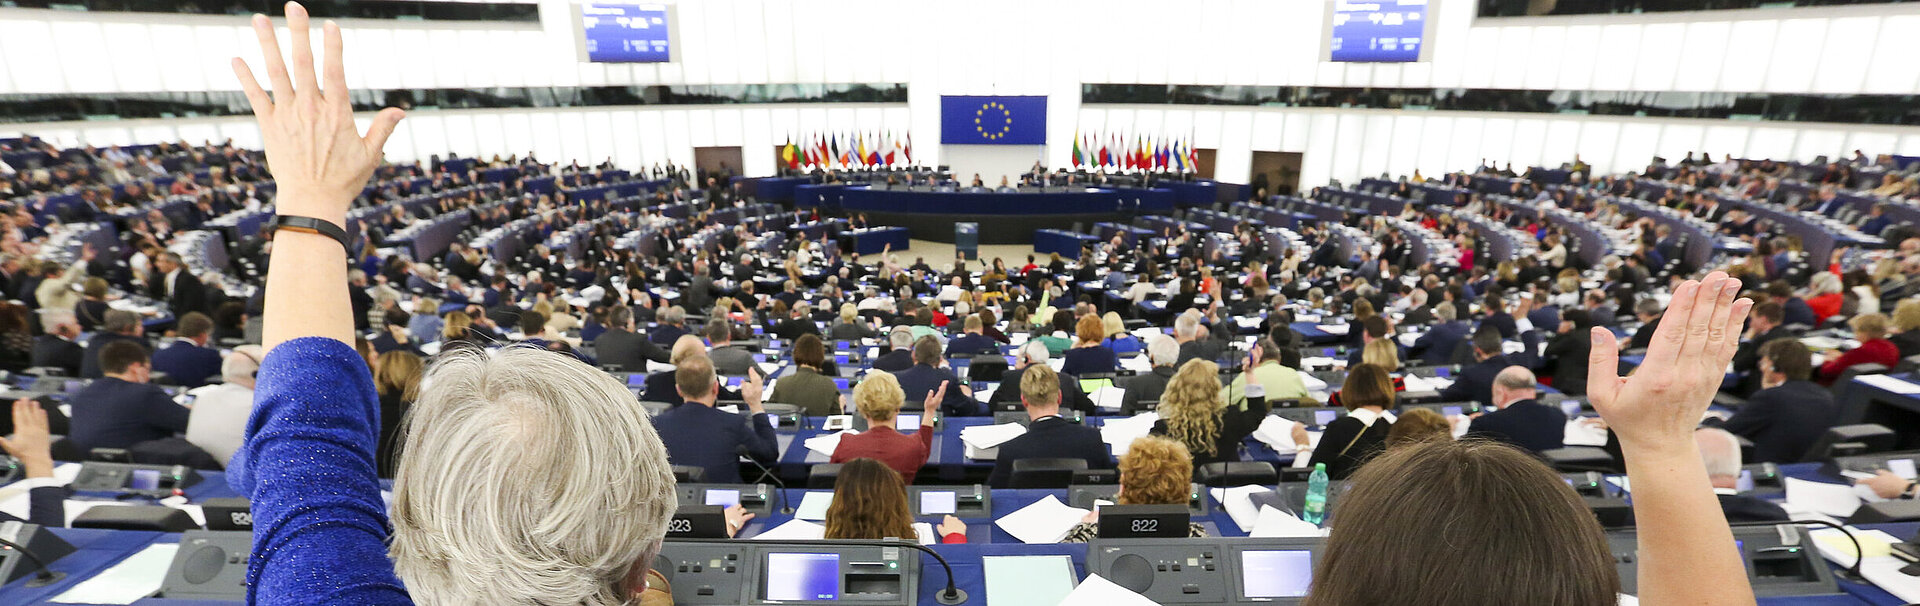 European Parliament Hemicycle, Photo: European Union 2019 / Fred Marvaux, Source: European Parliament